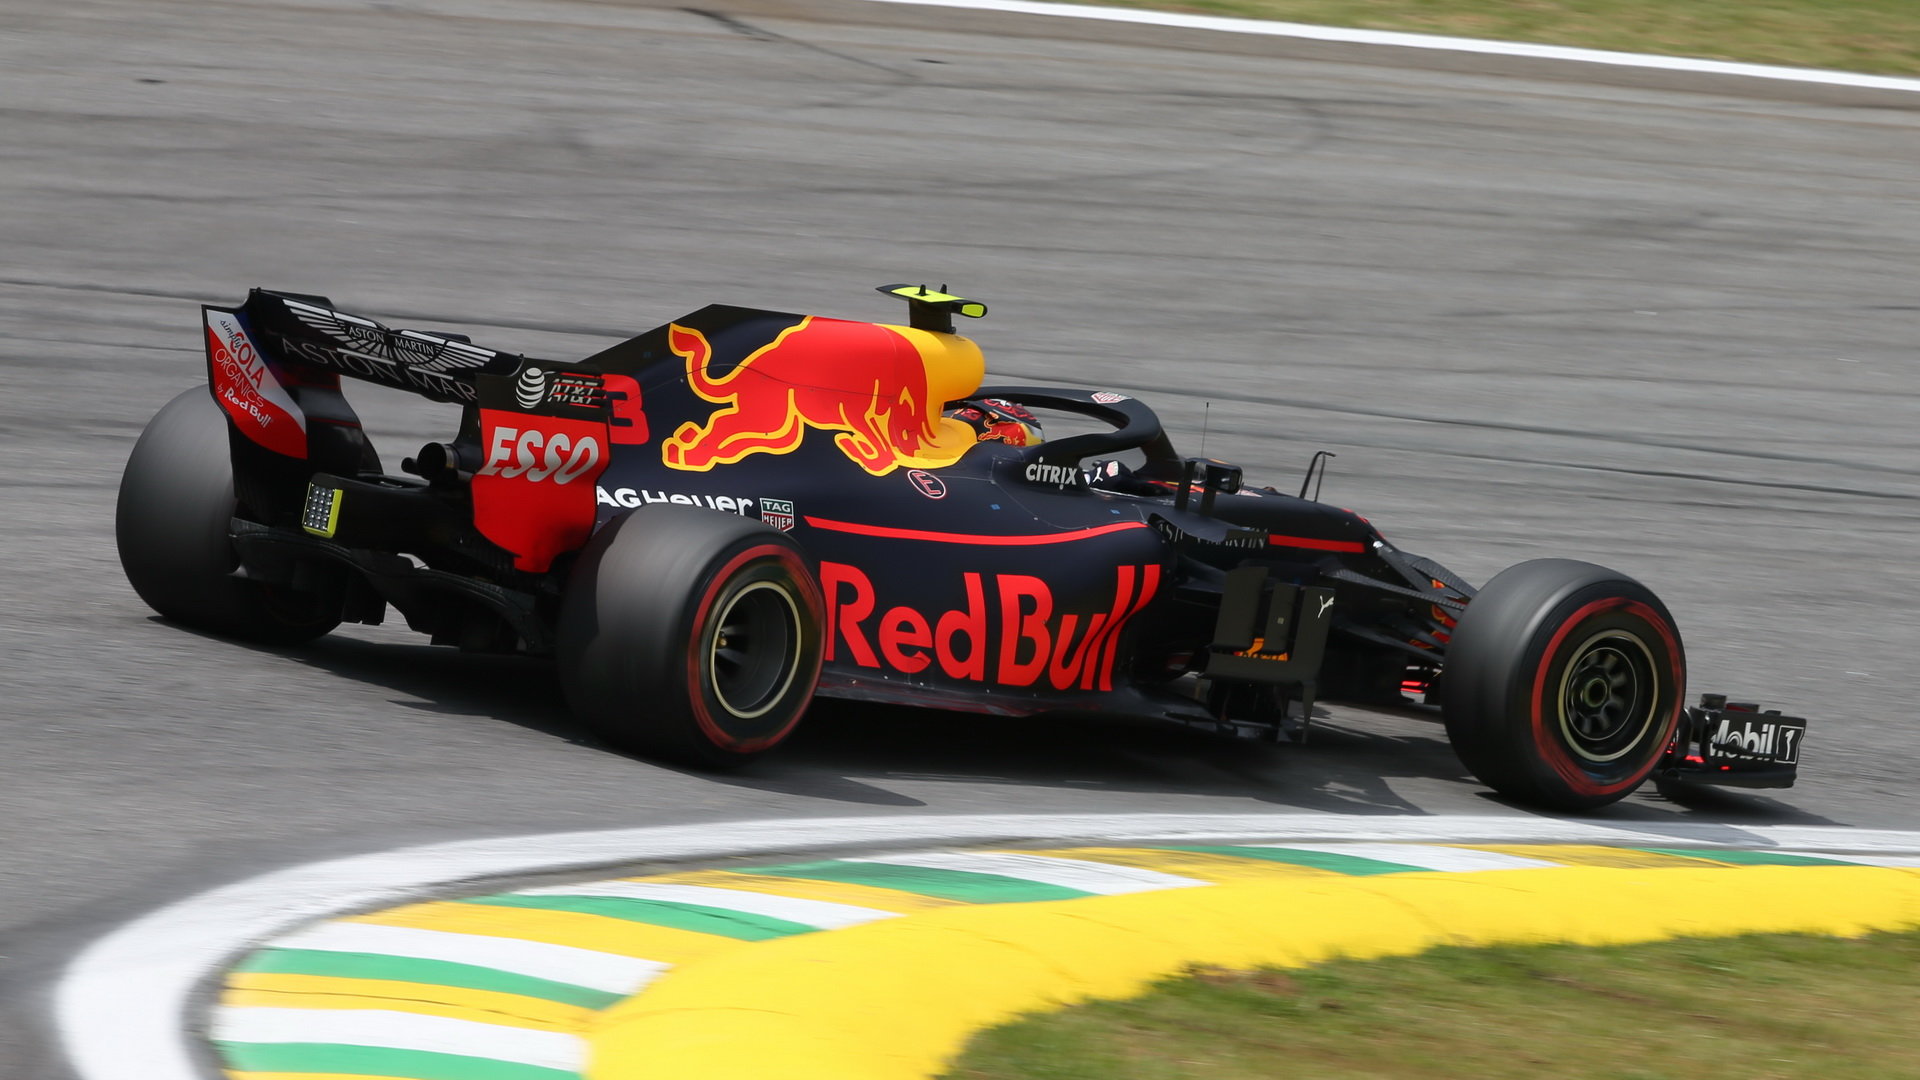 Max Verstappen v kvalifikaci v Brazílii